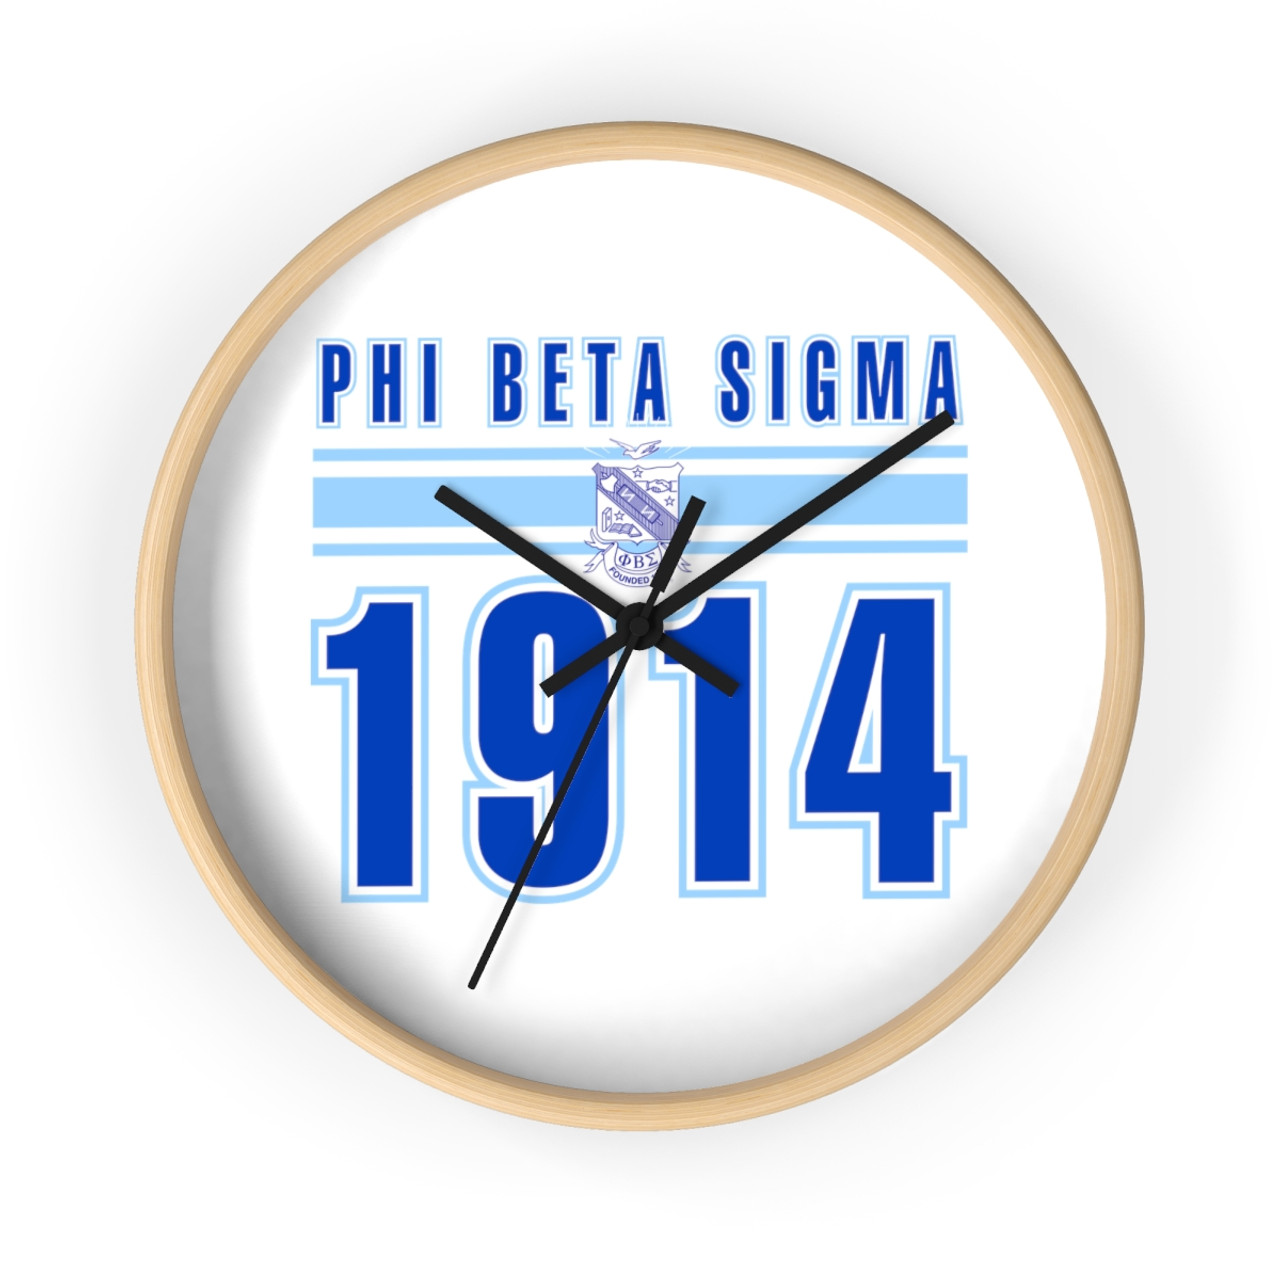 Phi beta sigma 1914, Phi beta sigma fraternity svg, Phi beta - Clip Art ...